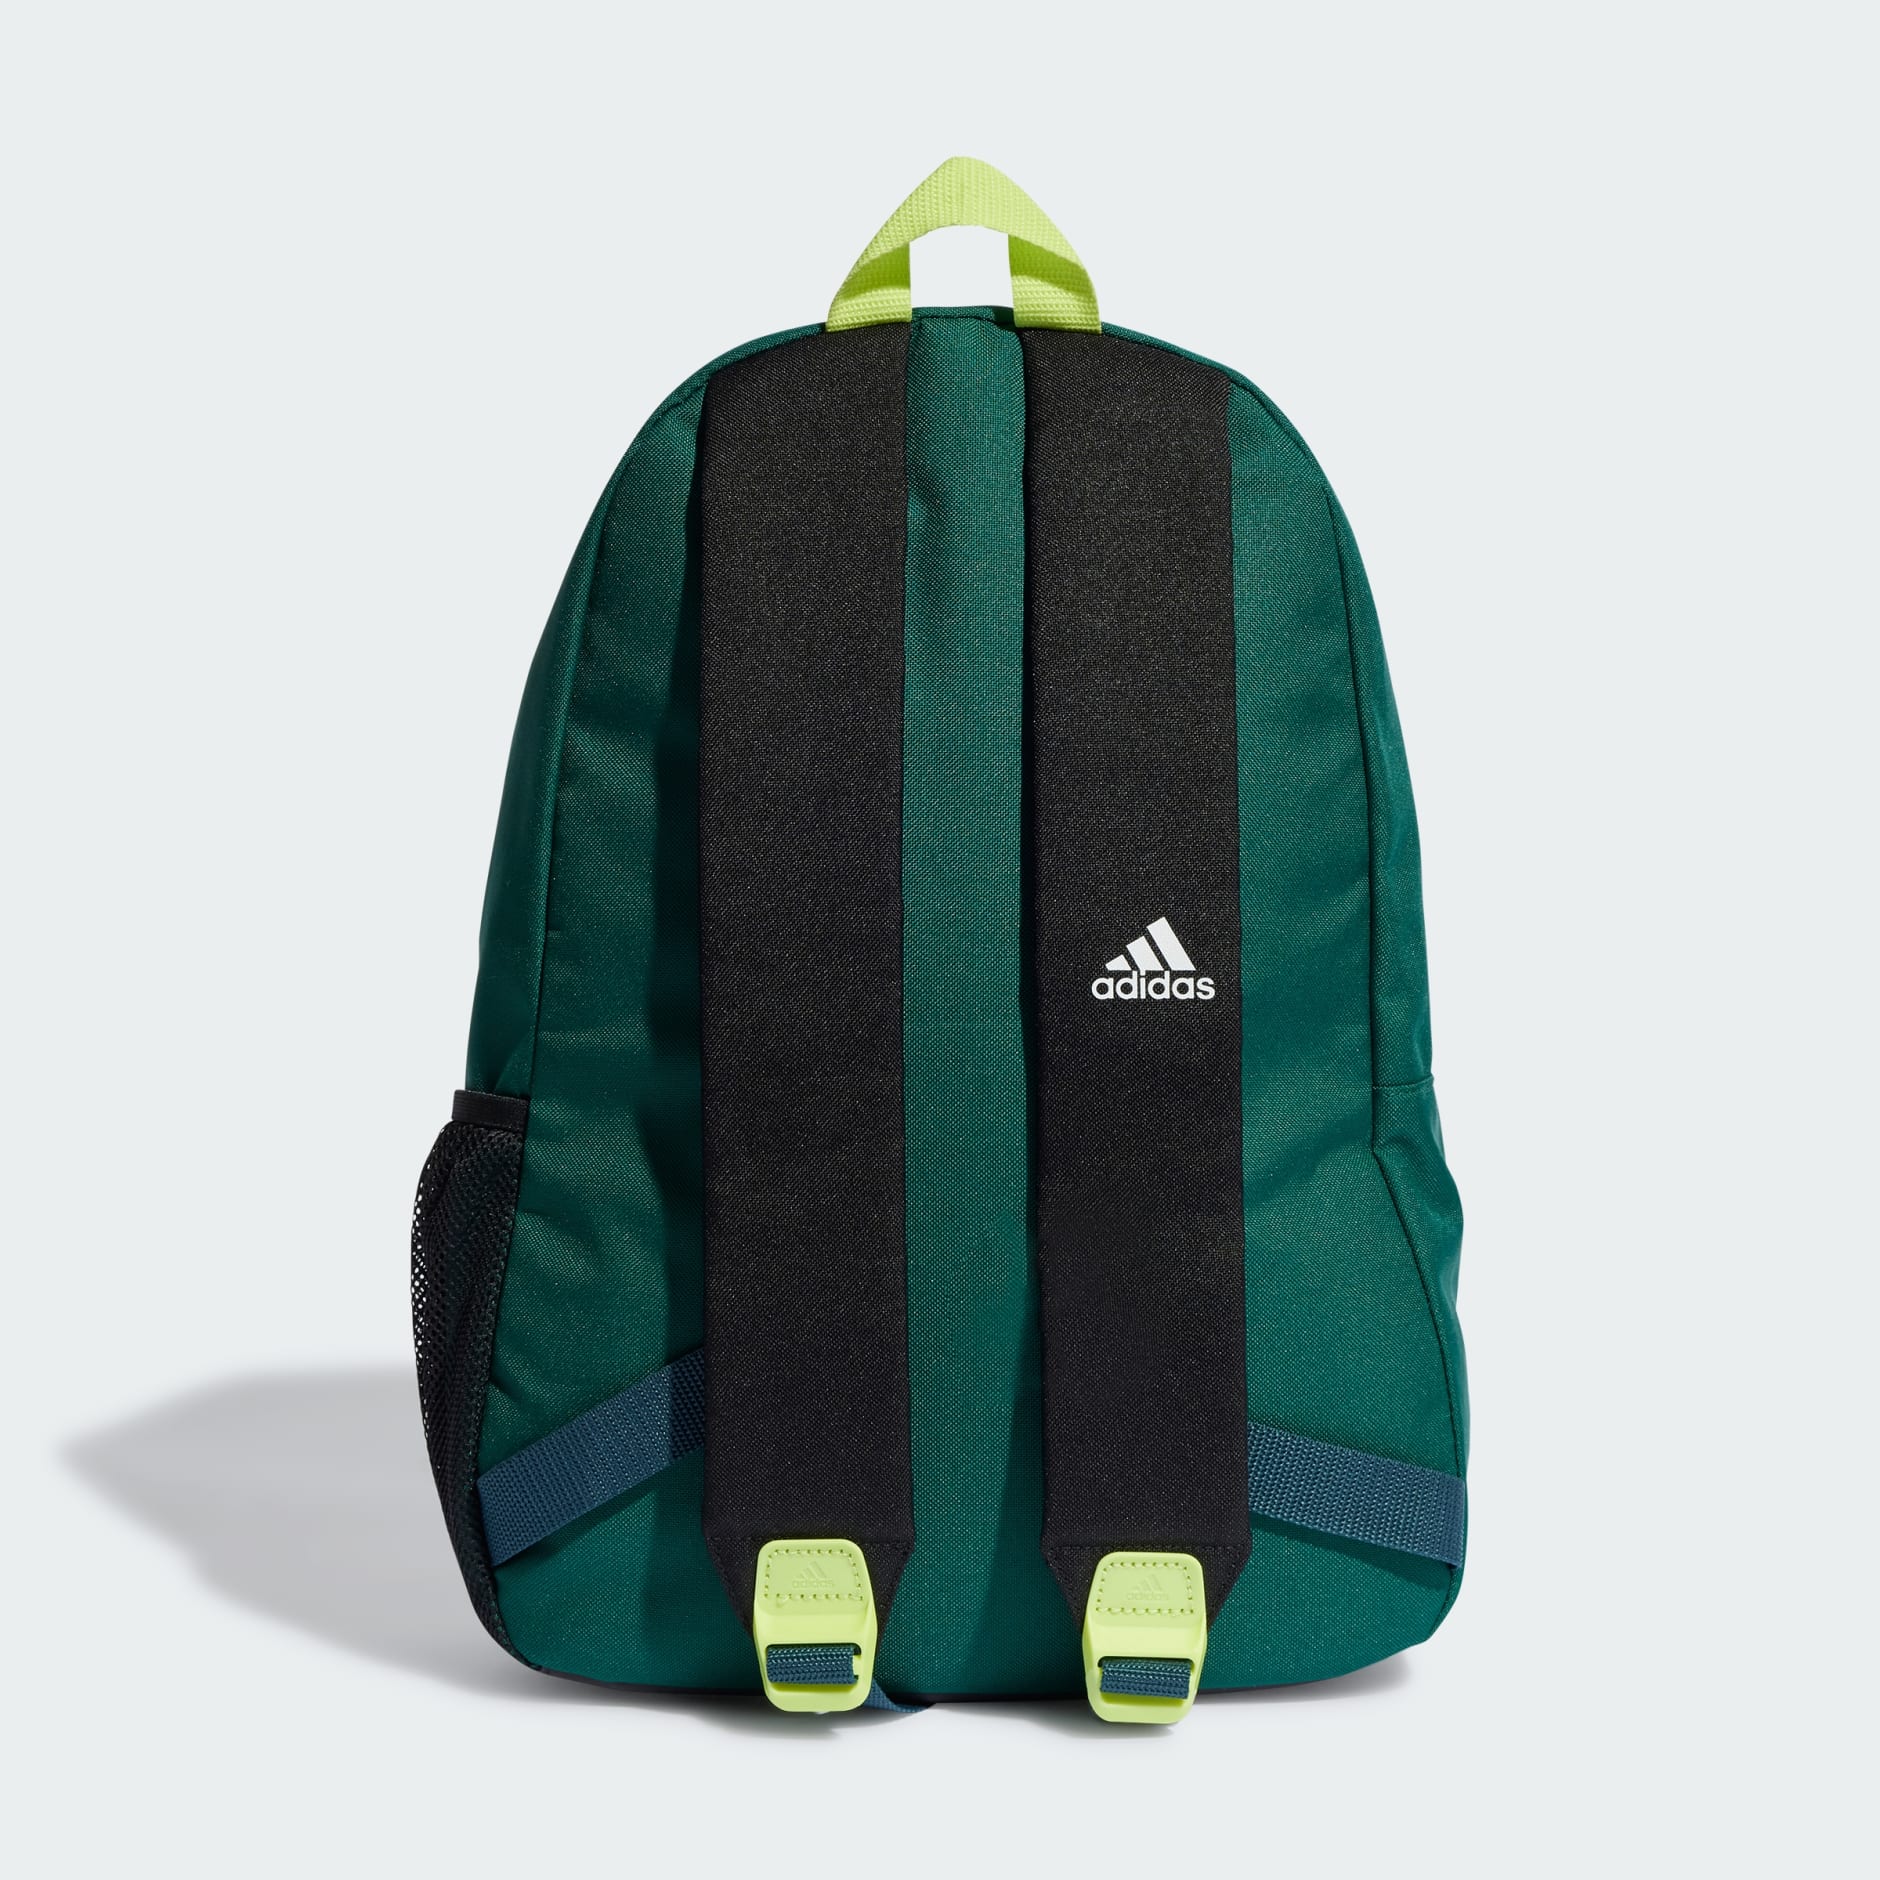 adidas Brand Love Backpack - Green | adidas LK